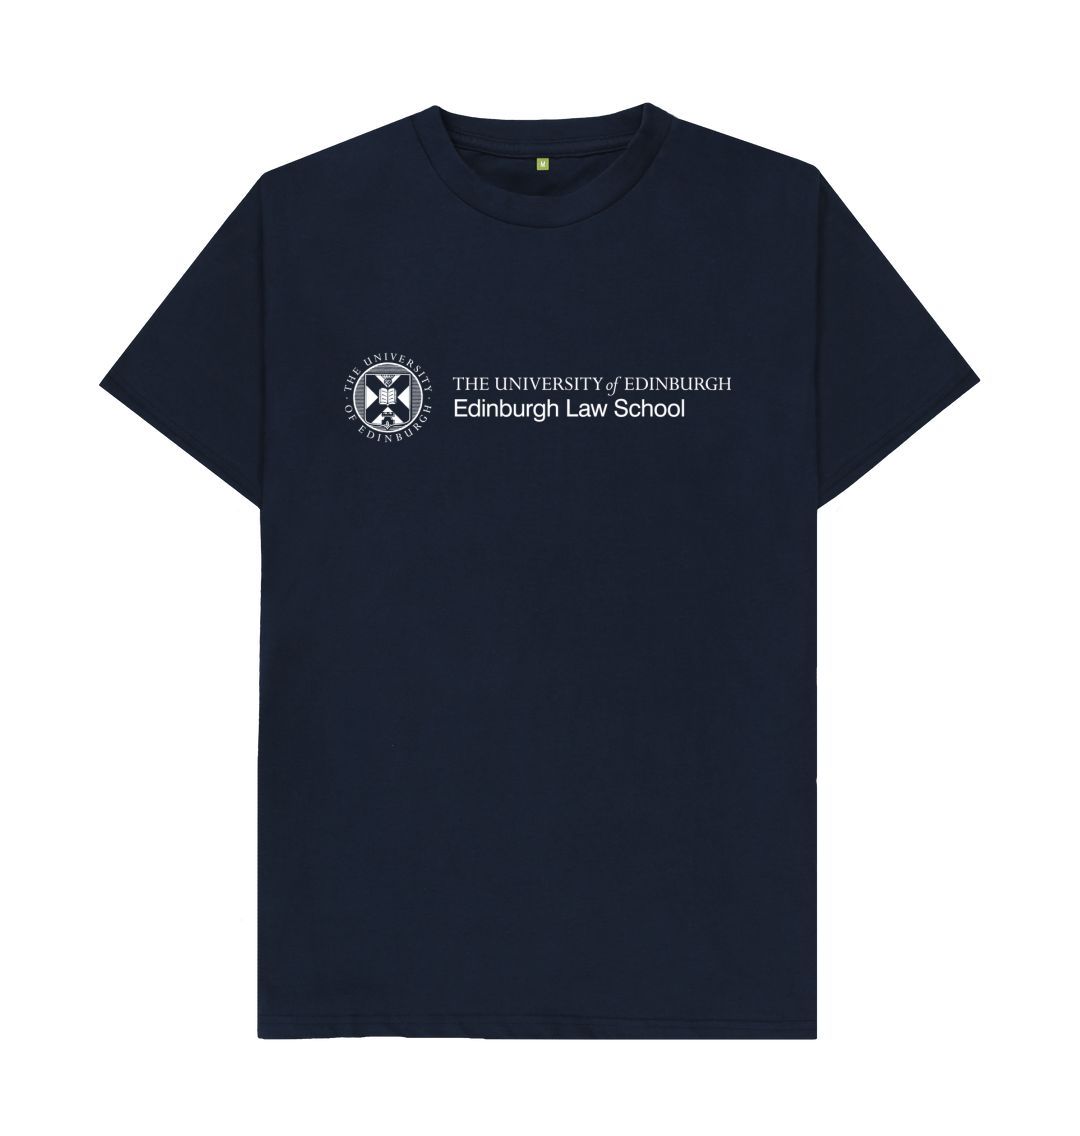 Navy T Shirt with white University crest and text that reads ' University of Edinburgh : Edinburgh Law School '